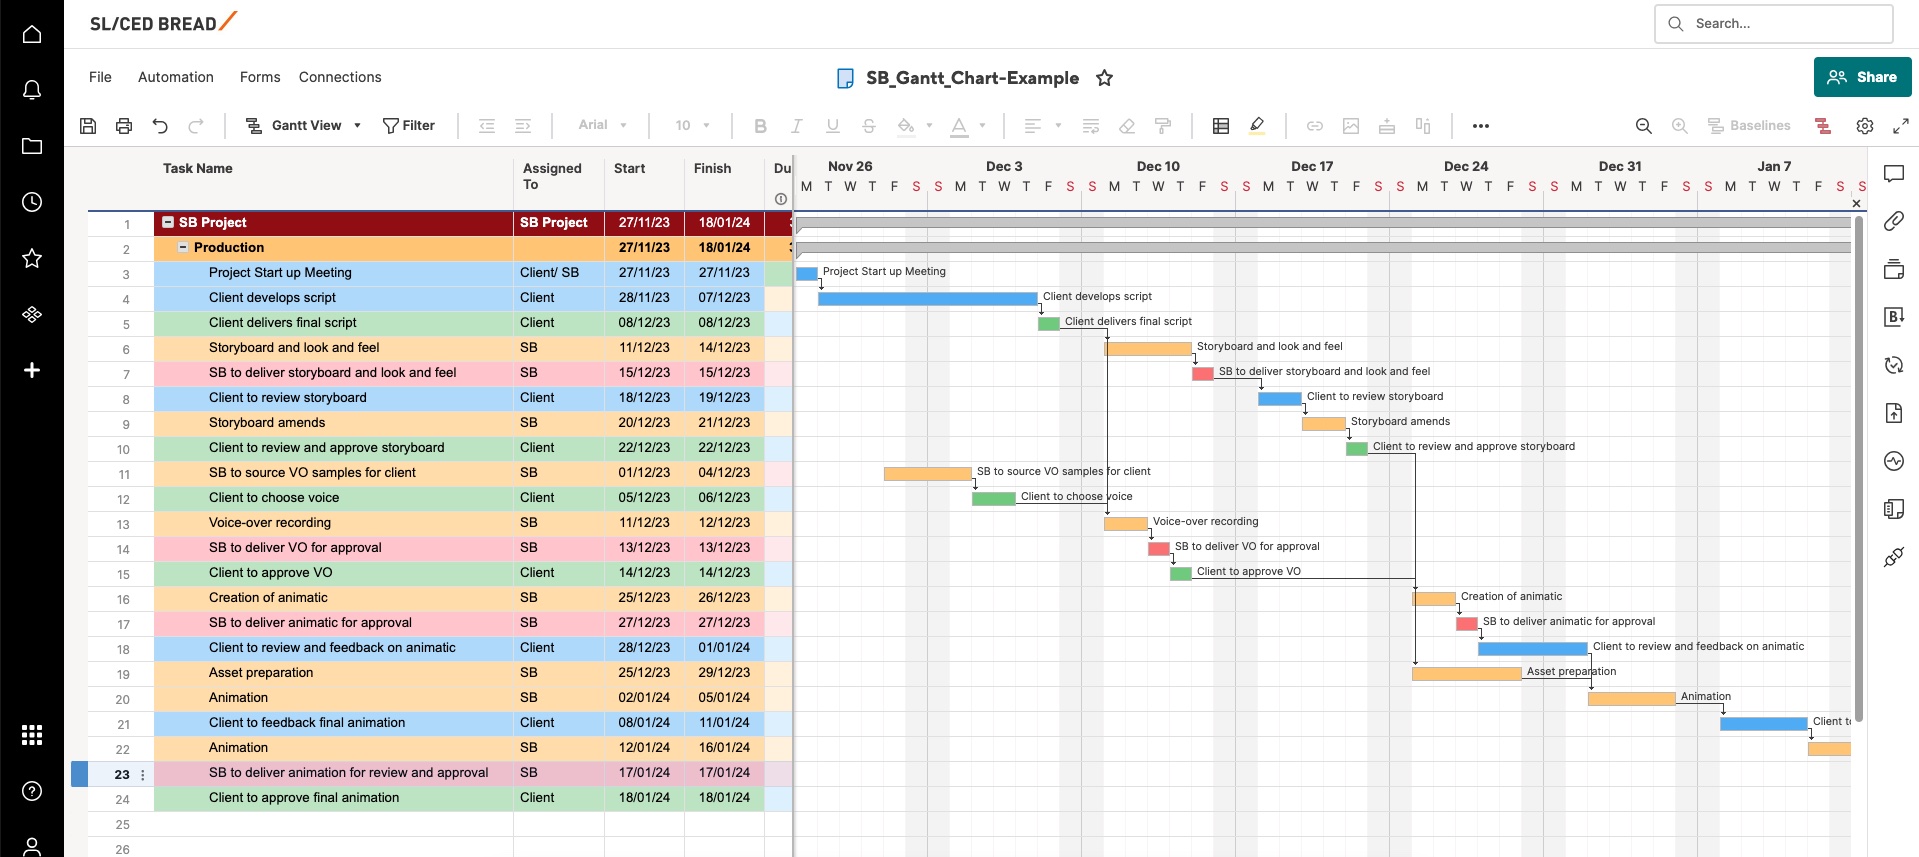 A screenshot from the software smartsheet showing a more complex gantt chart schedule